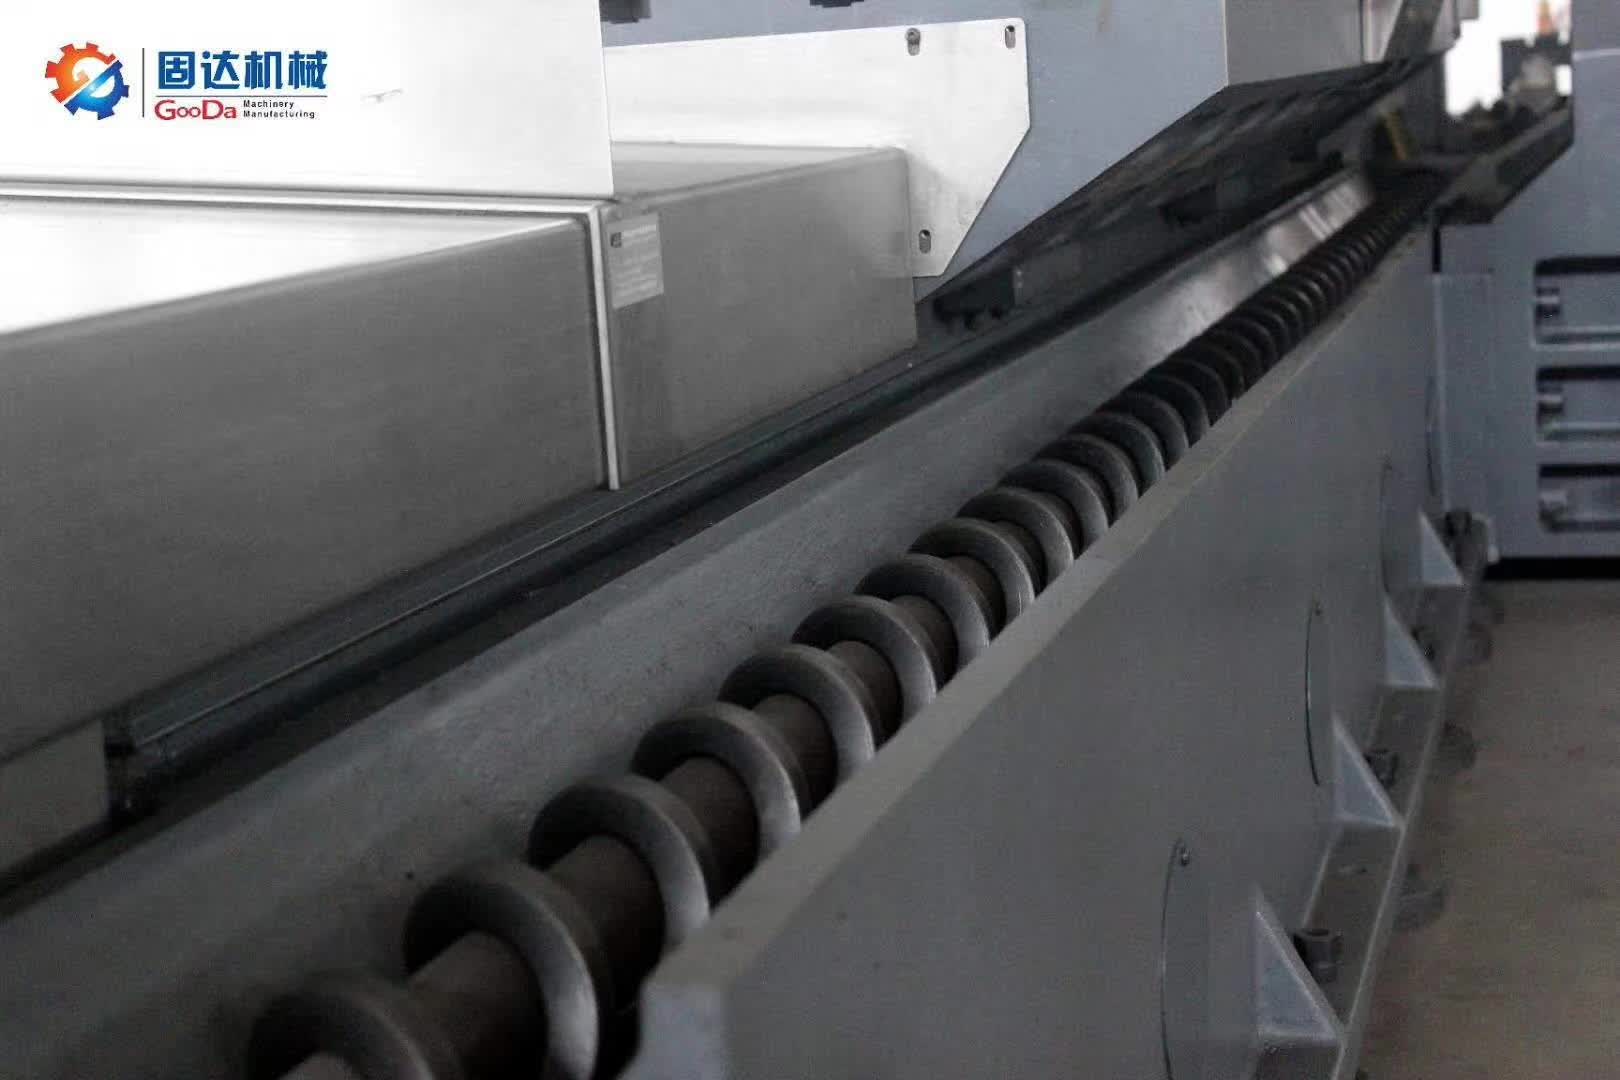 Vm-1830nc CNC gantry milling machine